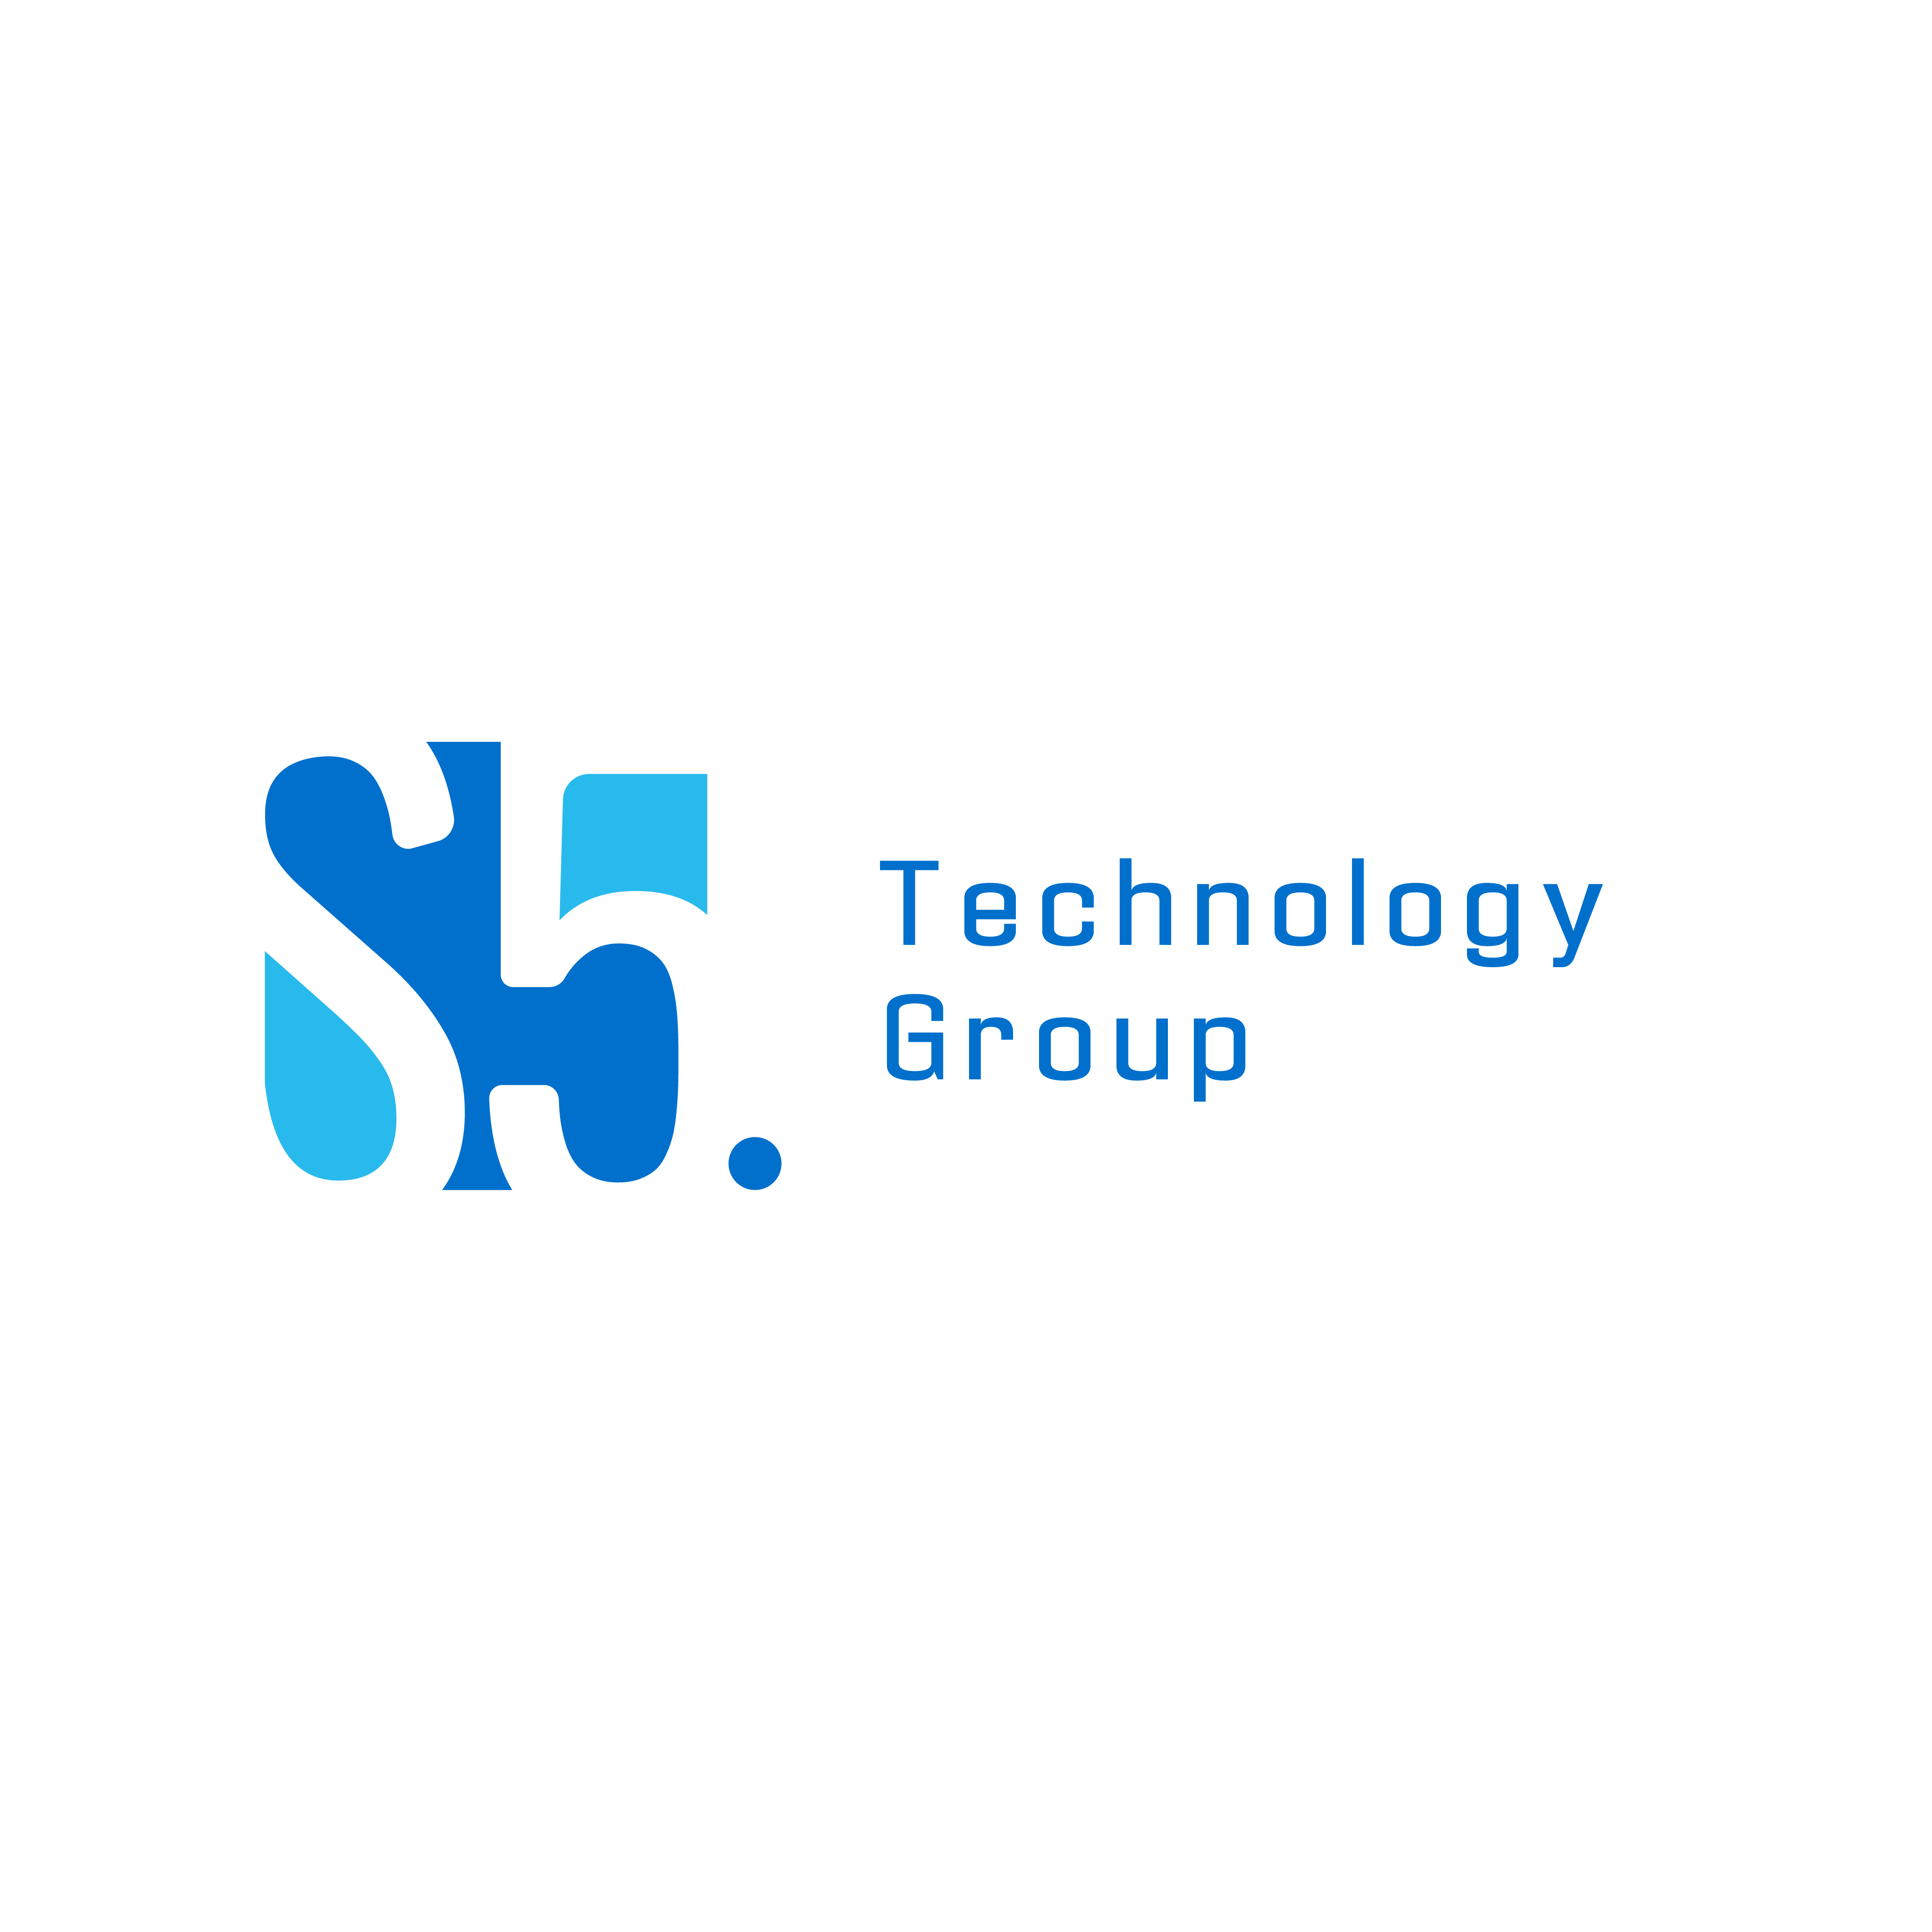 S5 Technology Group Cowra (02) 6341 4060